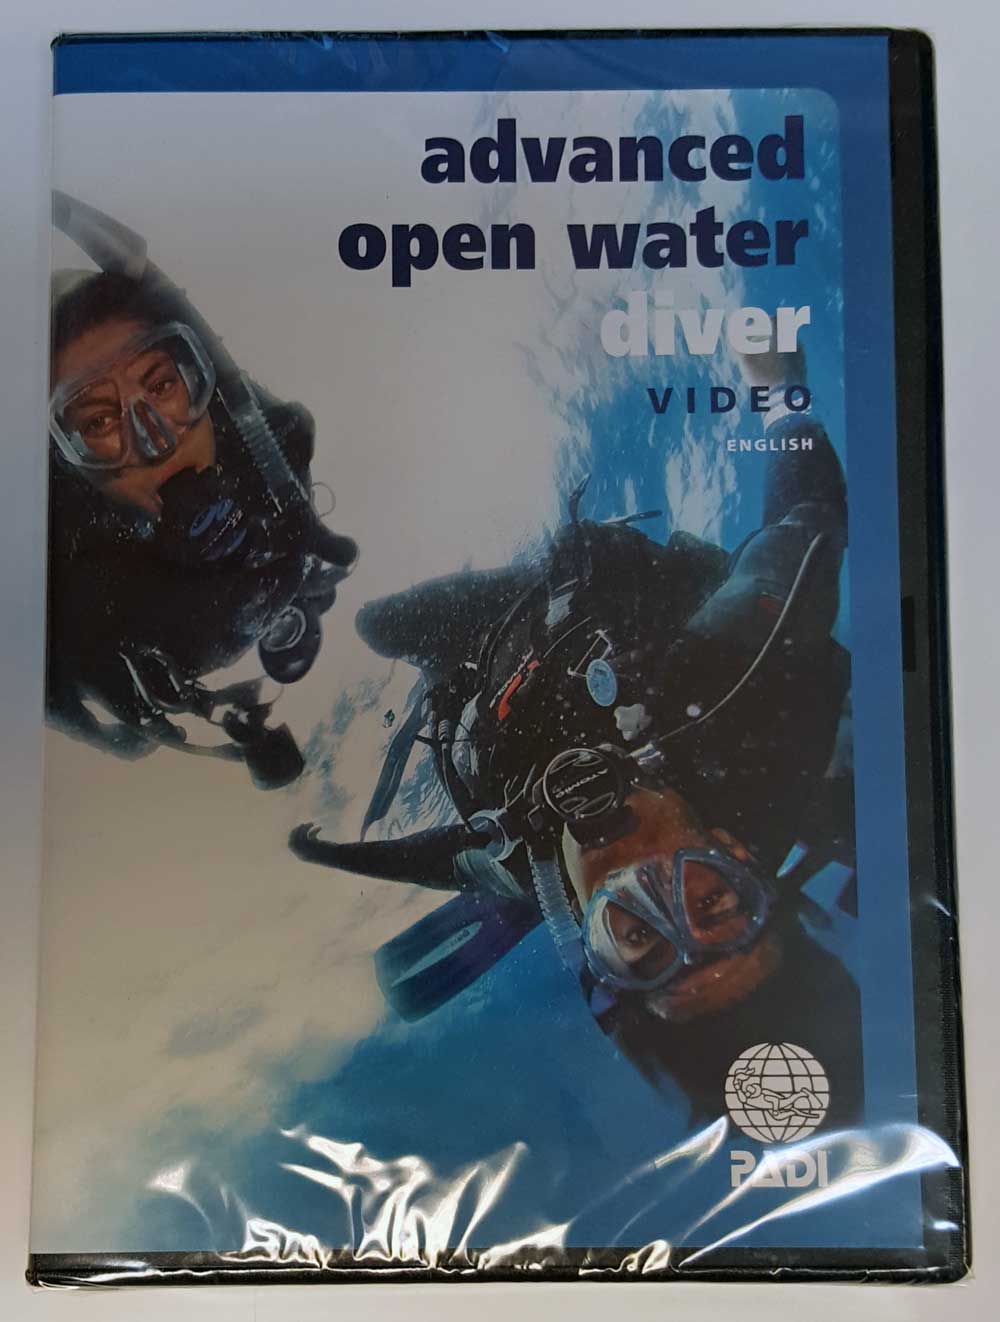 padi advanced open water diver manual pdf download